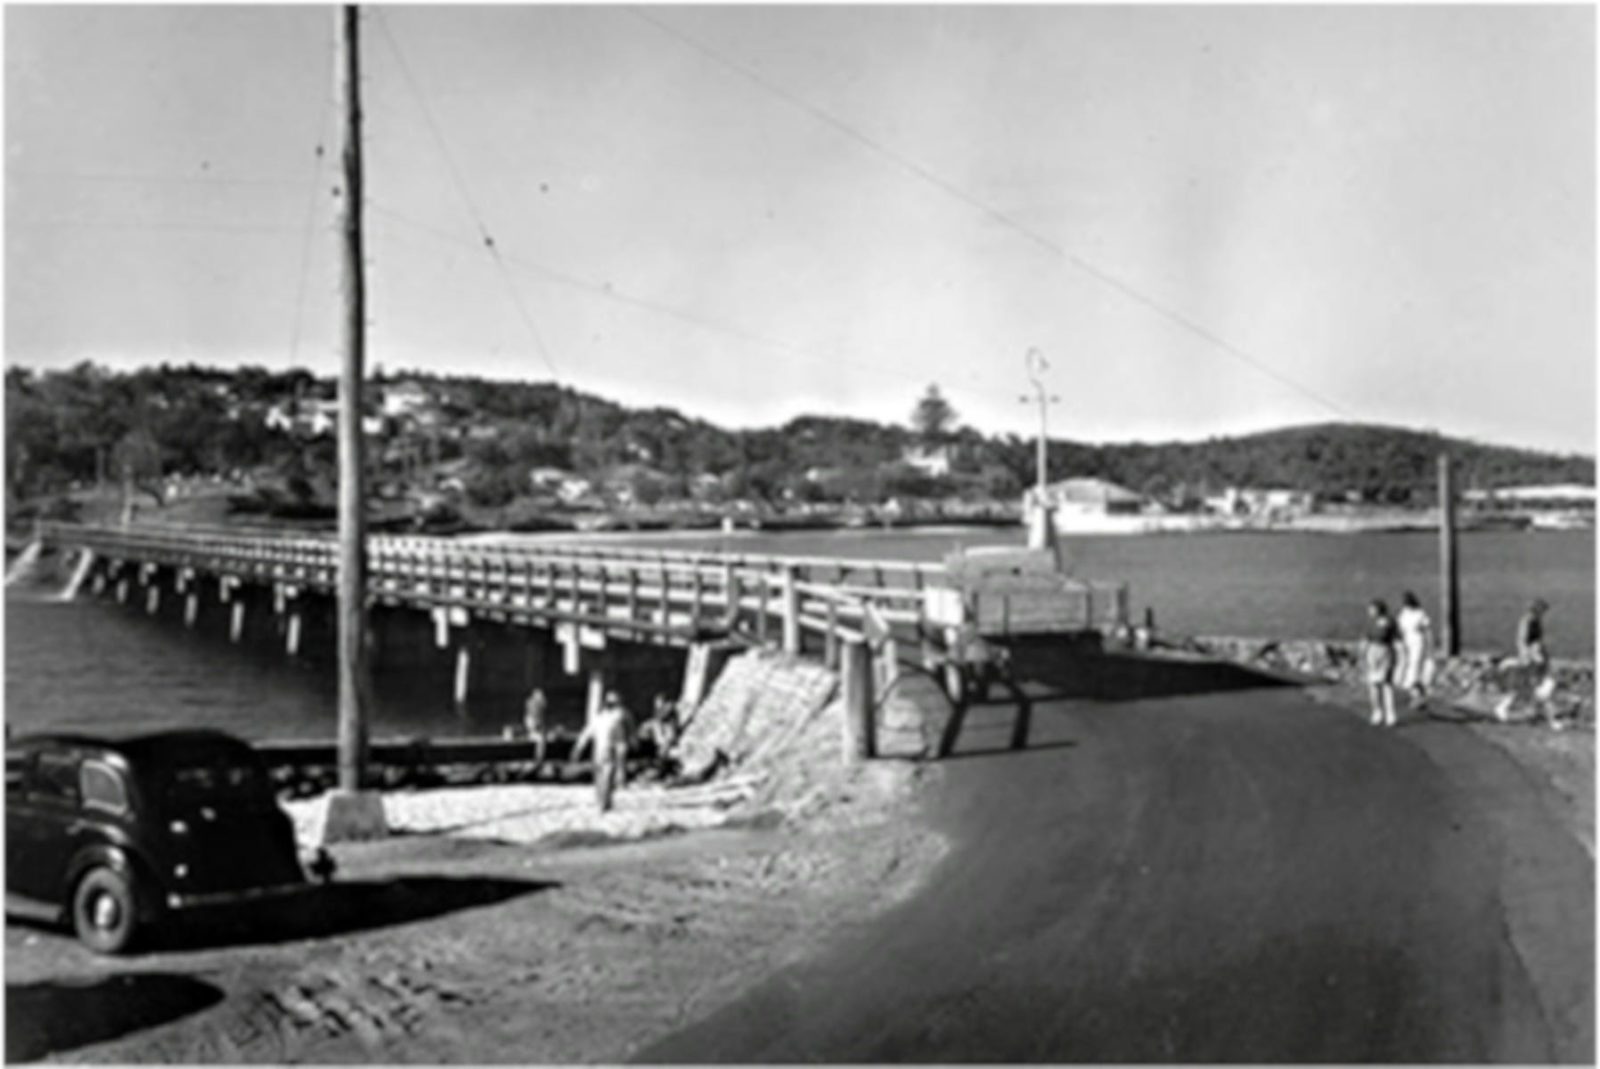 Missingham Bridge in olden days